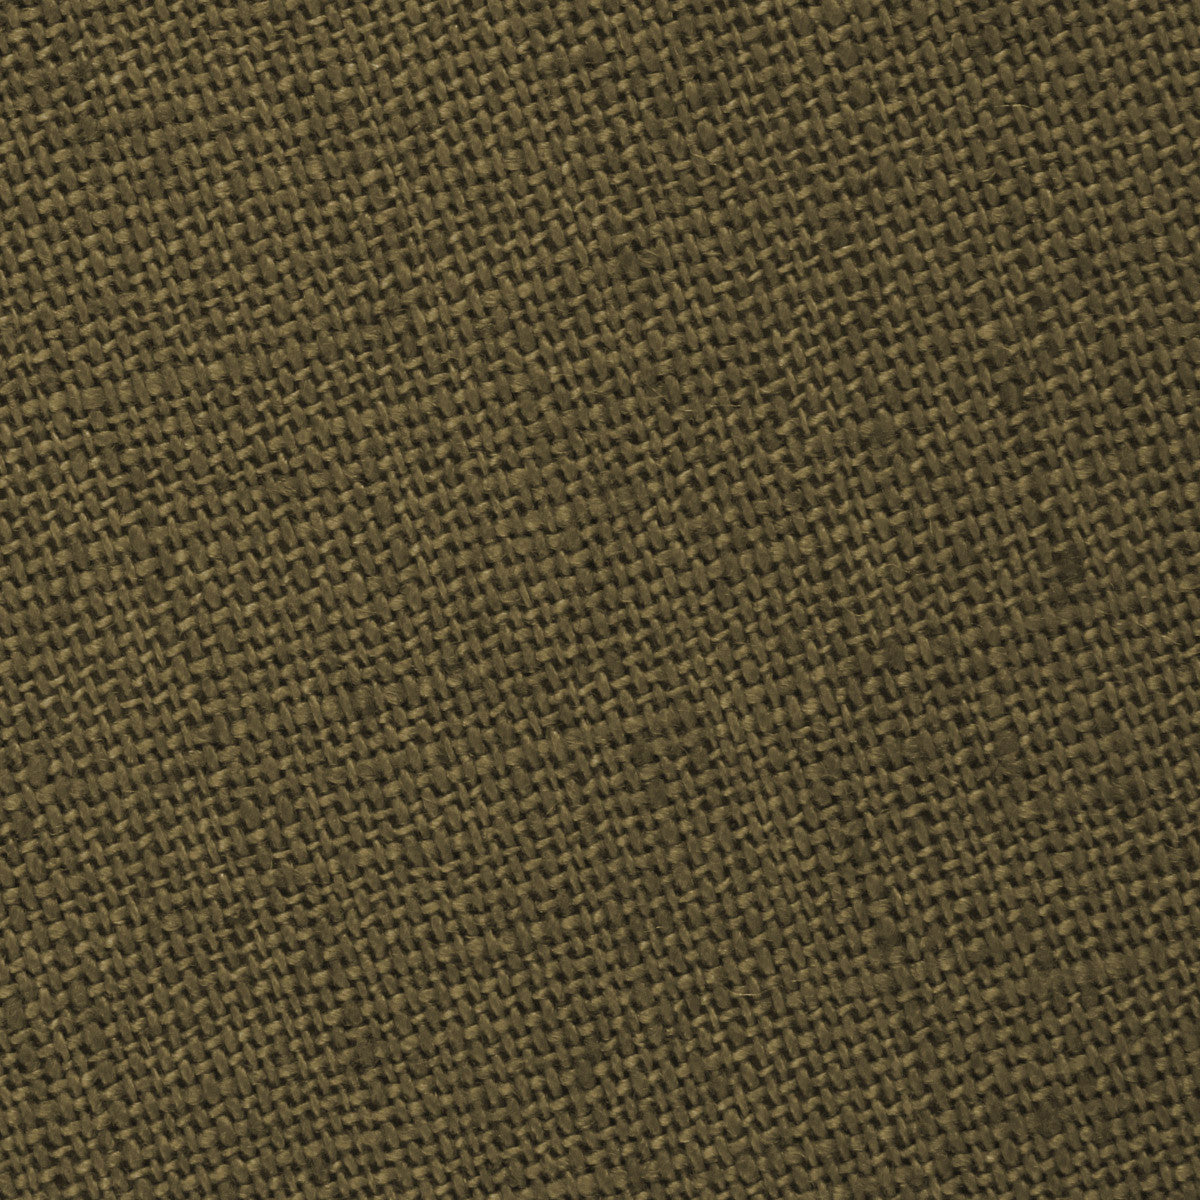 Dry Green Khaki Linen Fabric Pocket Square